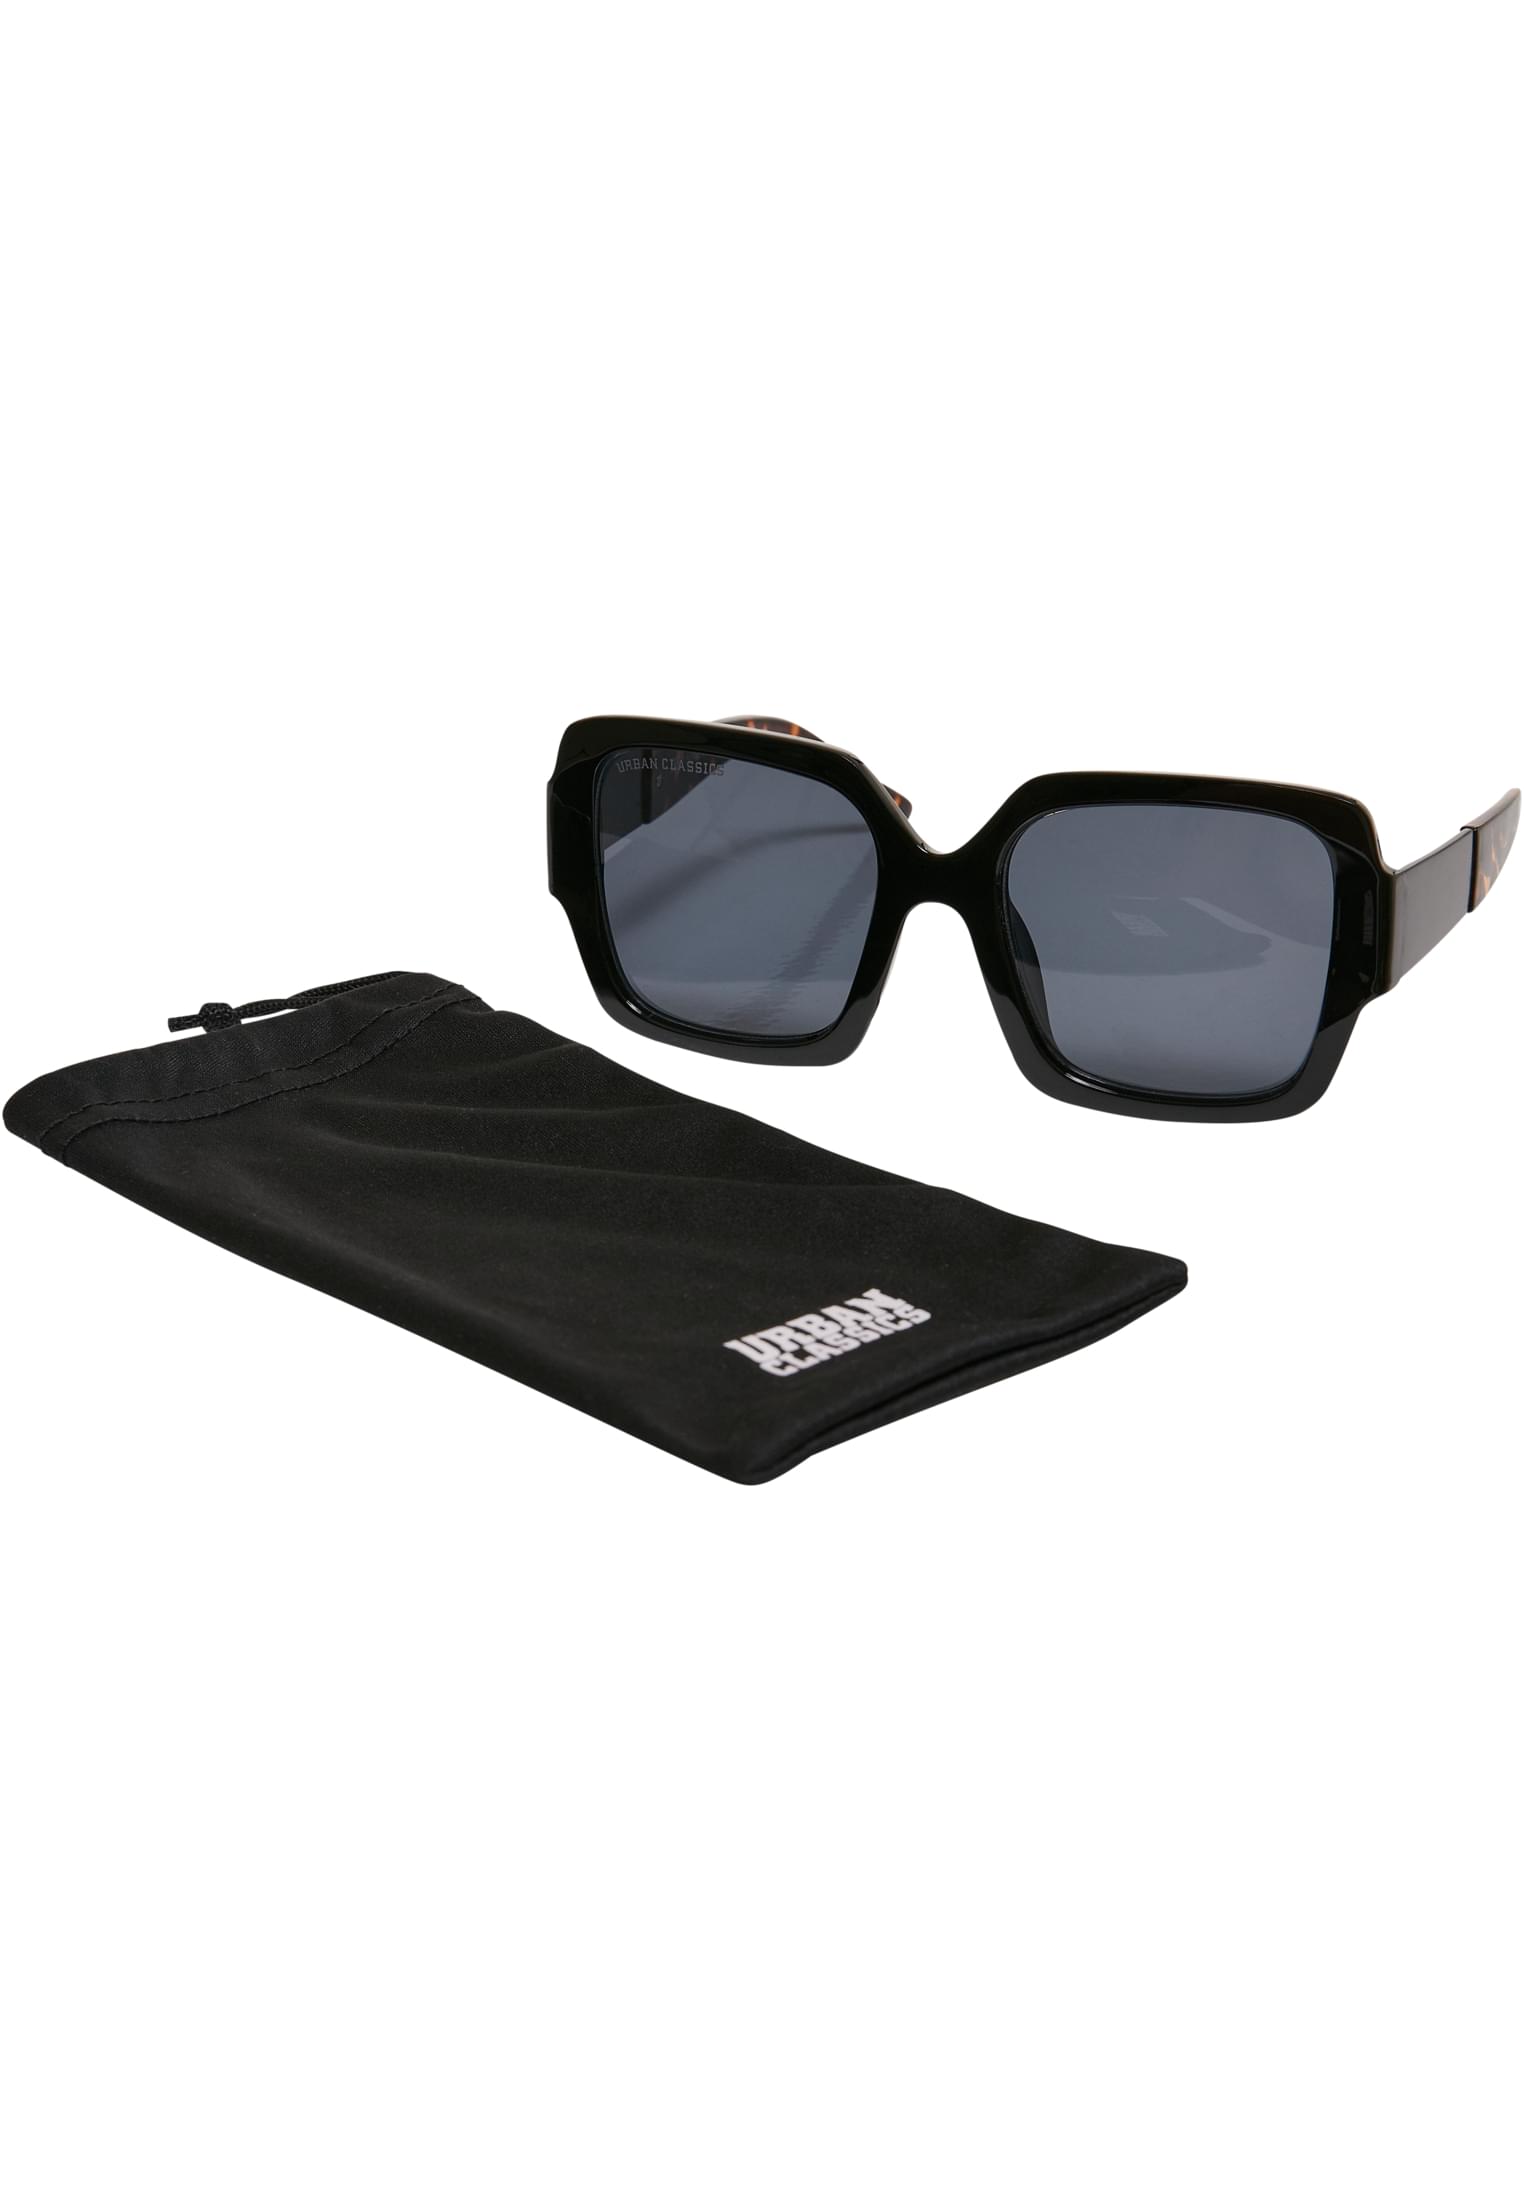 Sunglasses Beijing Black/Amber